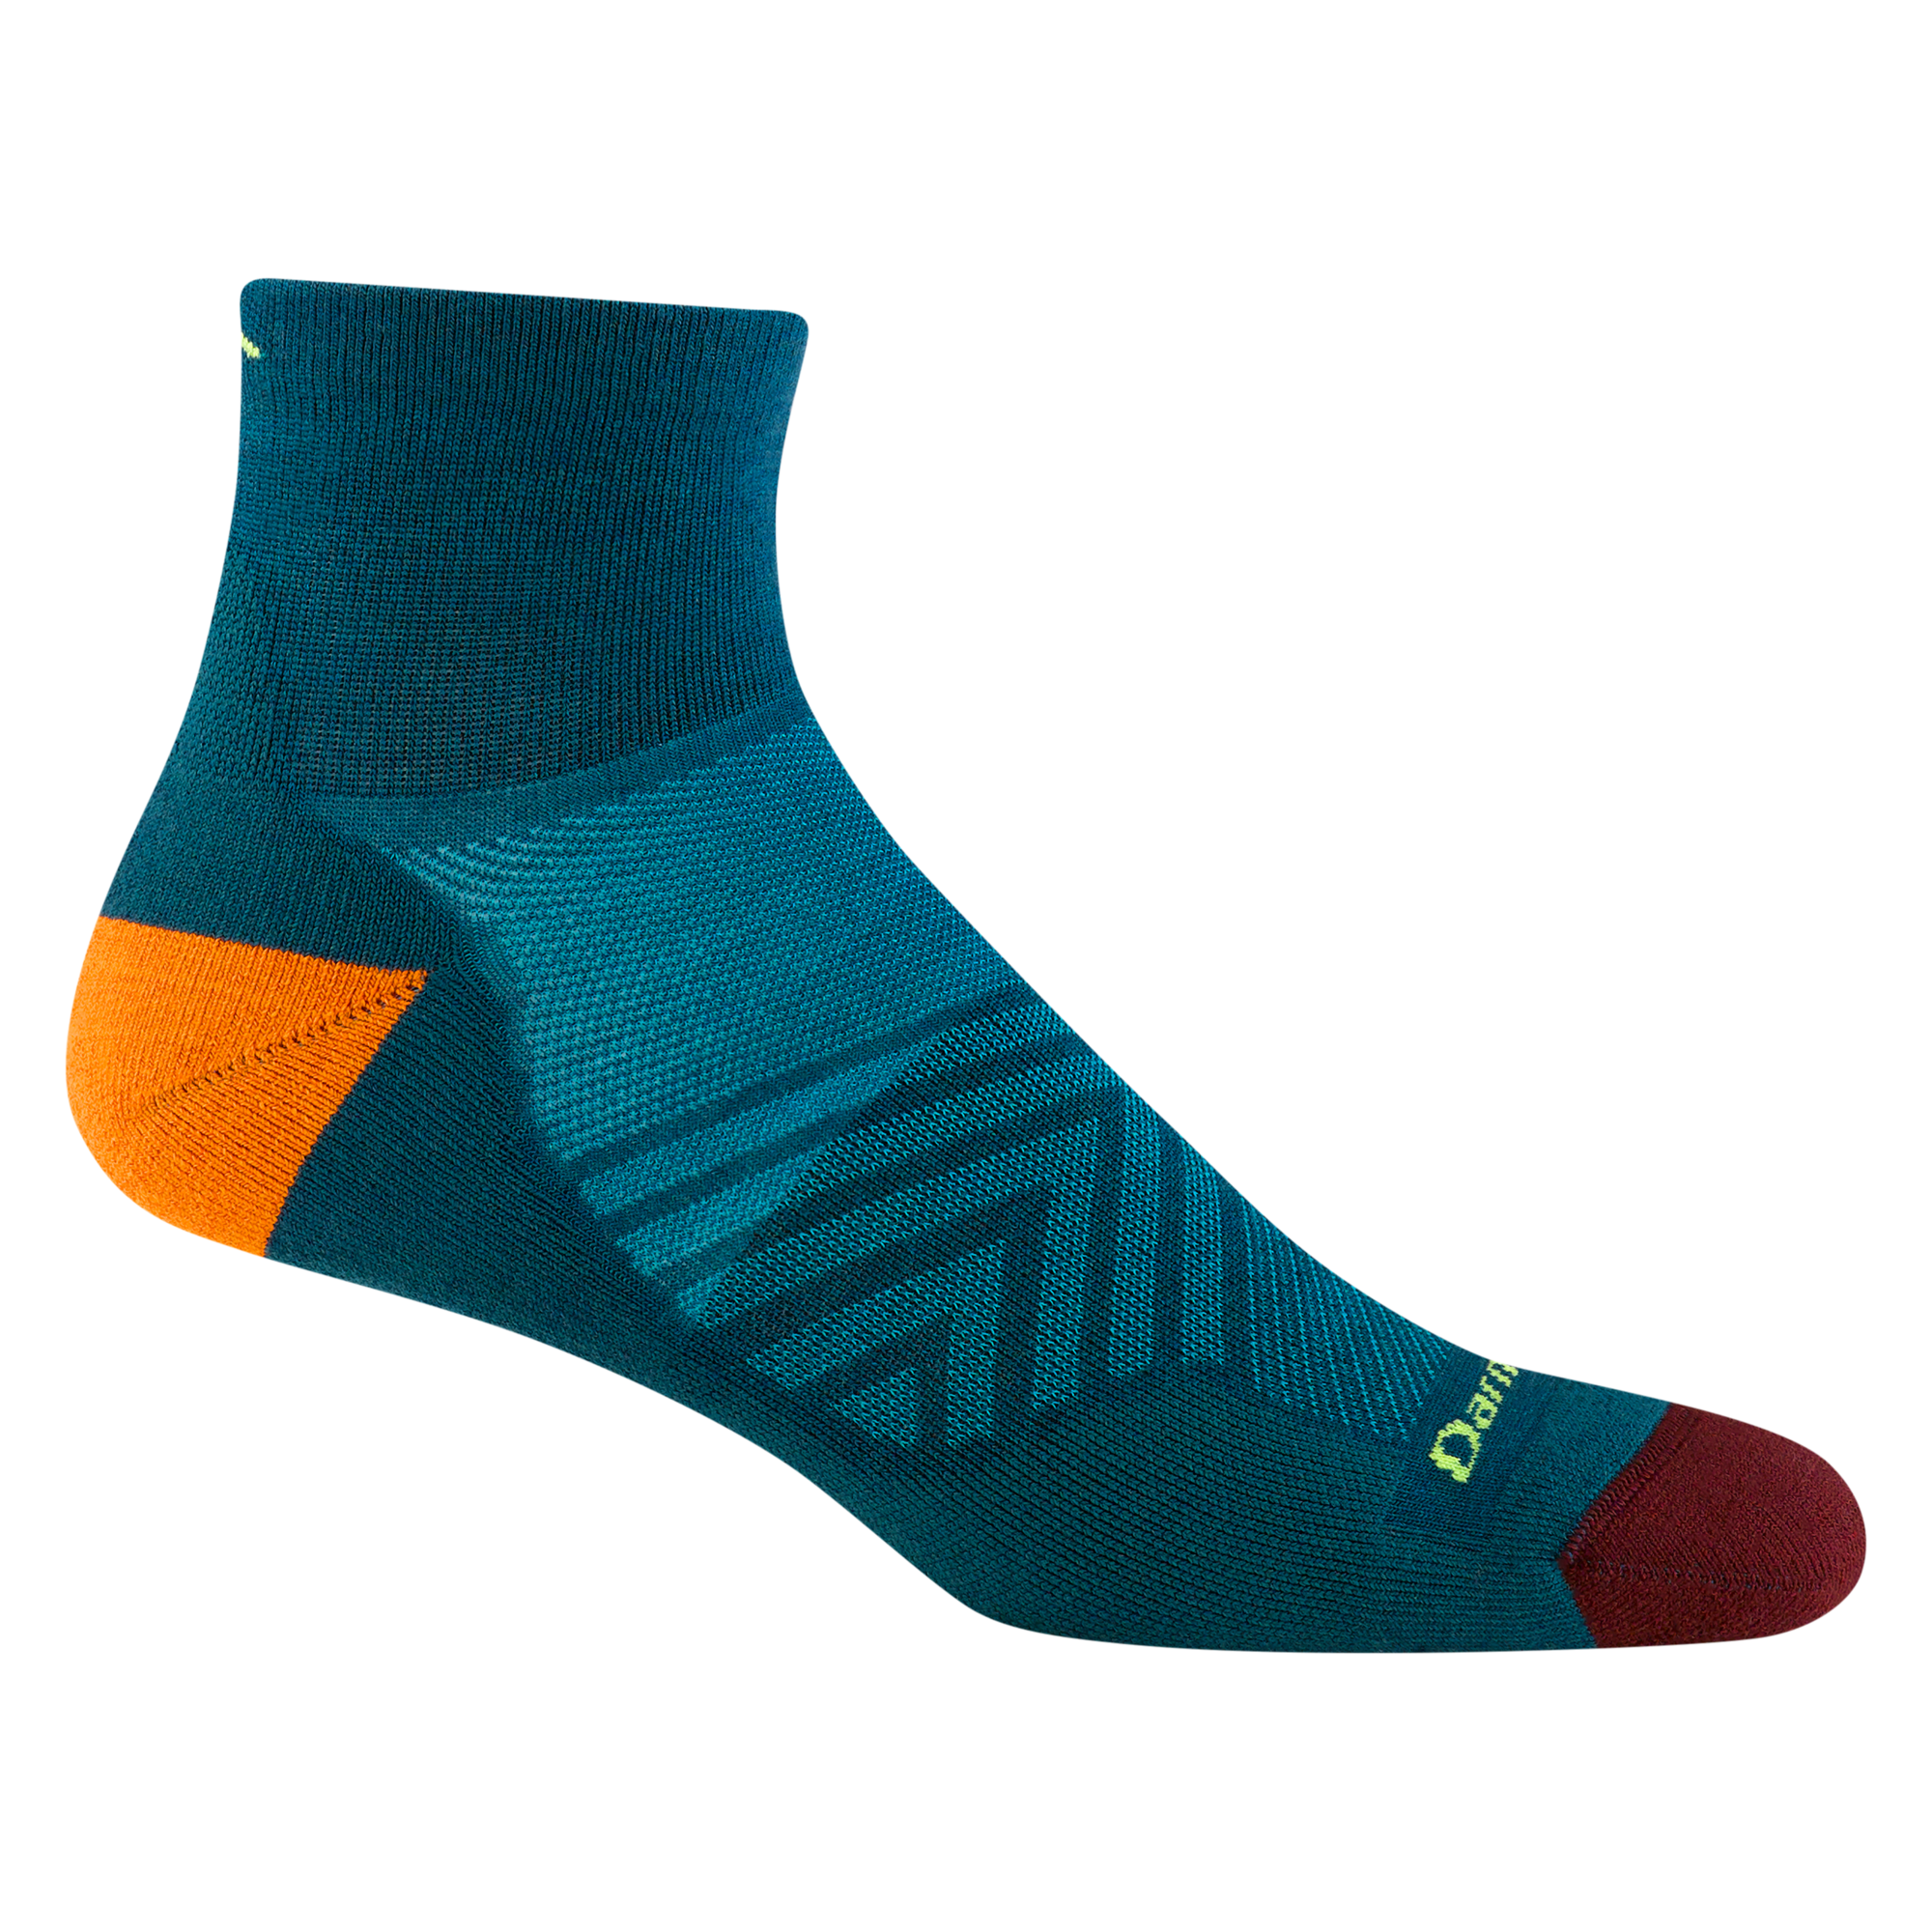 1040 men's quarter running sock in dark teal with burgundy toe and orange heel accents